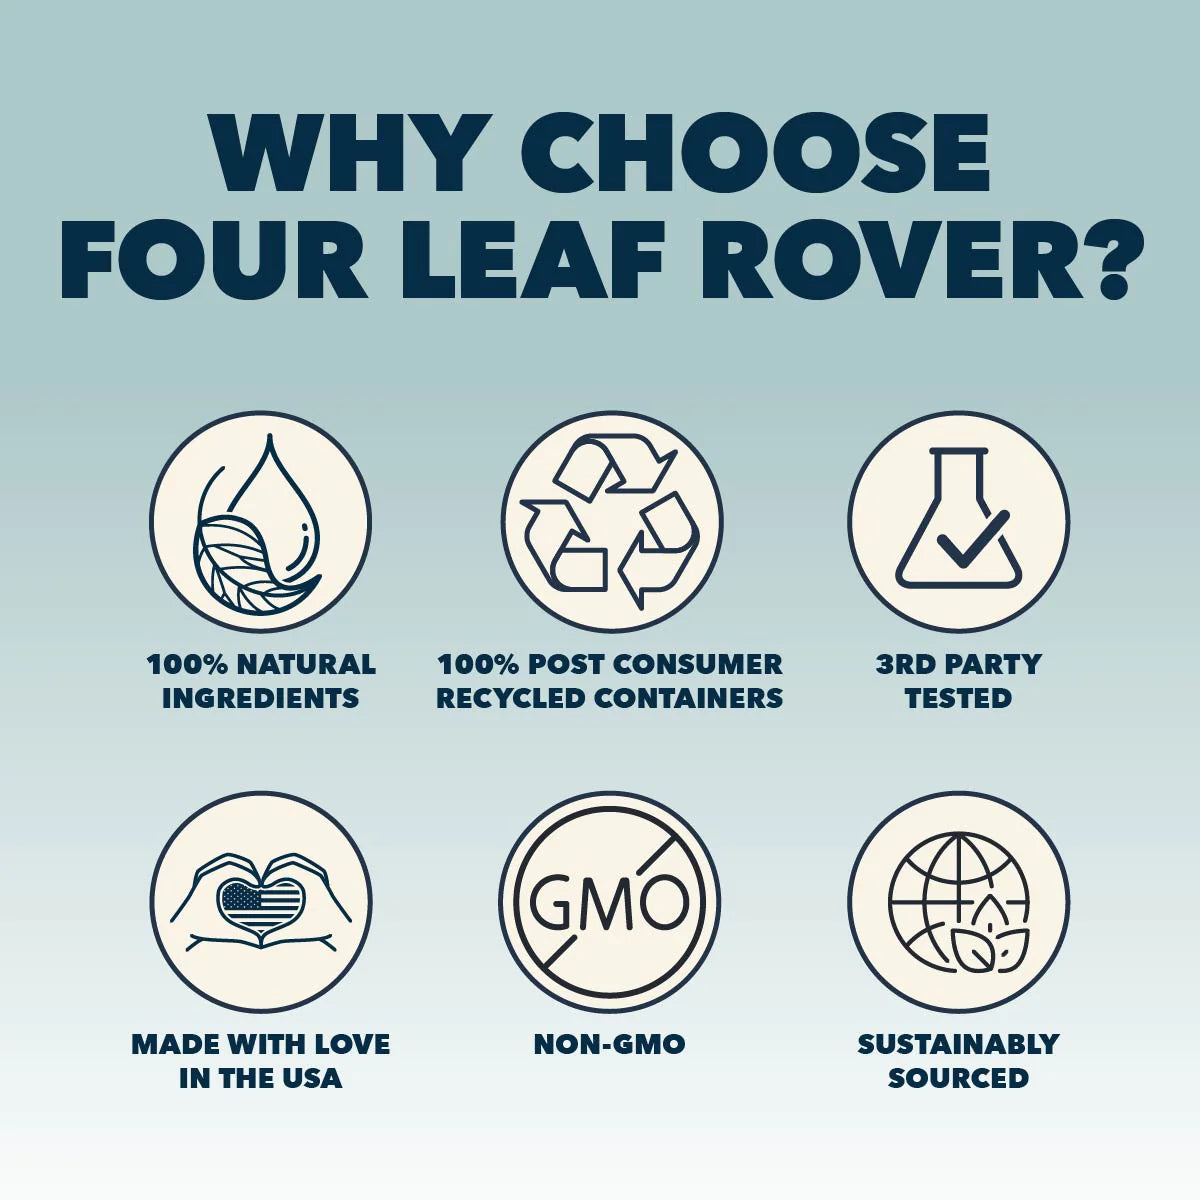 Four Leaf Rover Harmony | Seasonal Allergy Support